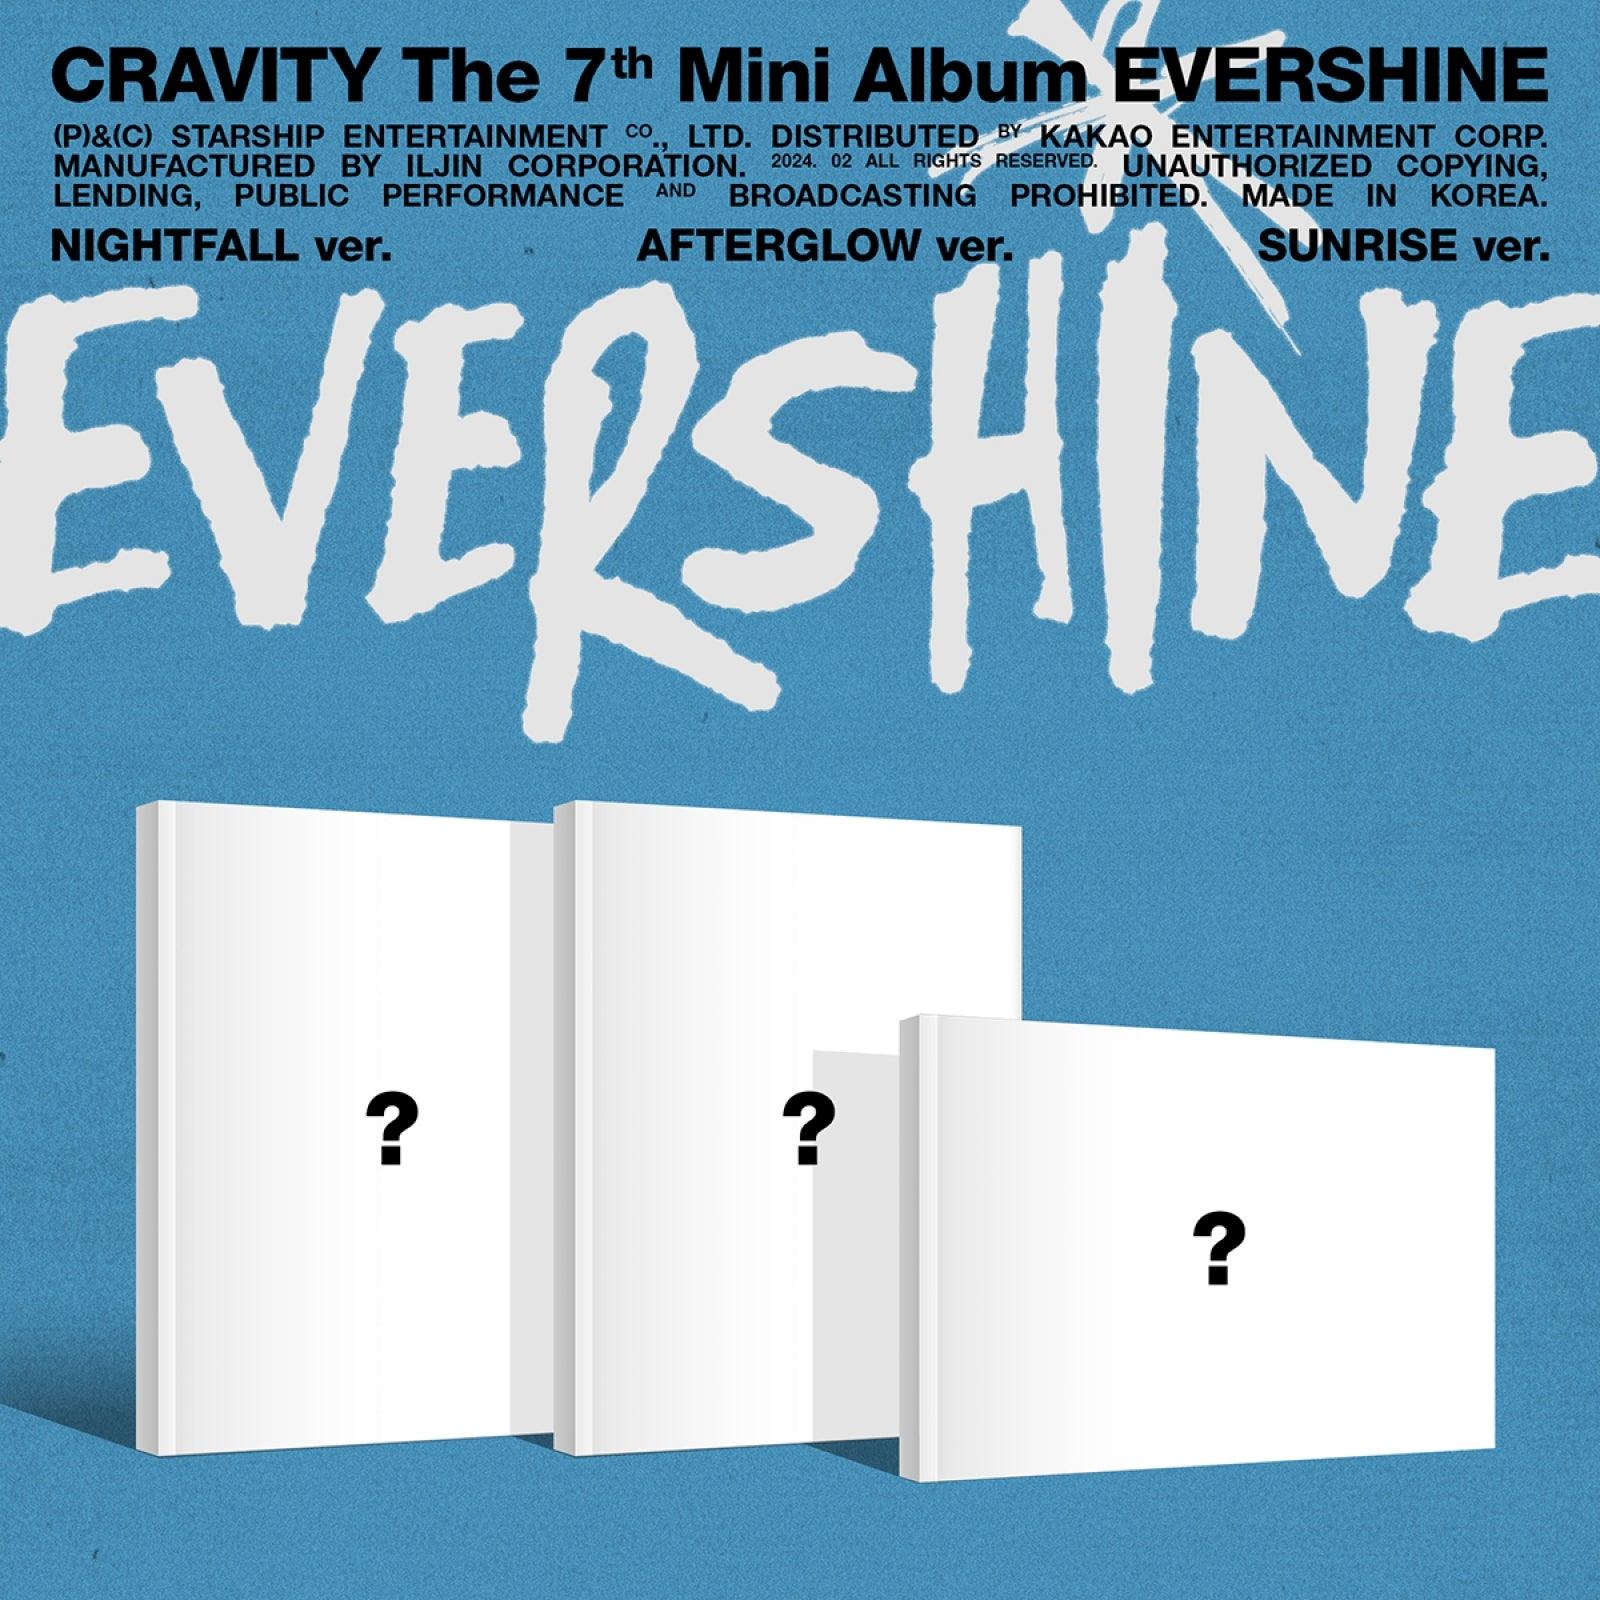 CRAVITY - EVERSHINE / THE 7TH MINI ALBUM - Shopping Around the World with Goodsnjoy